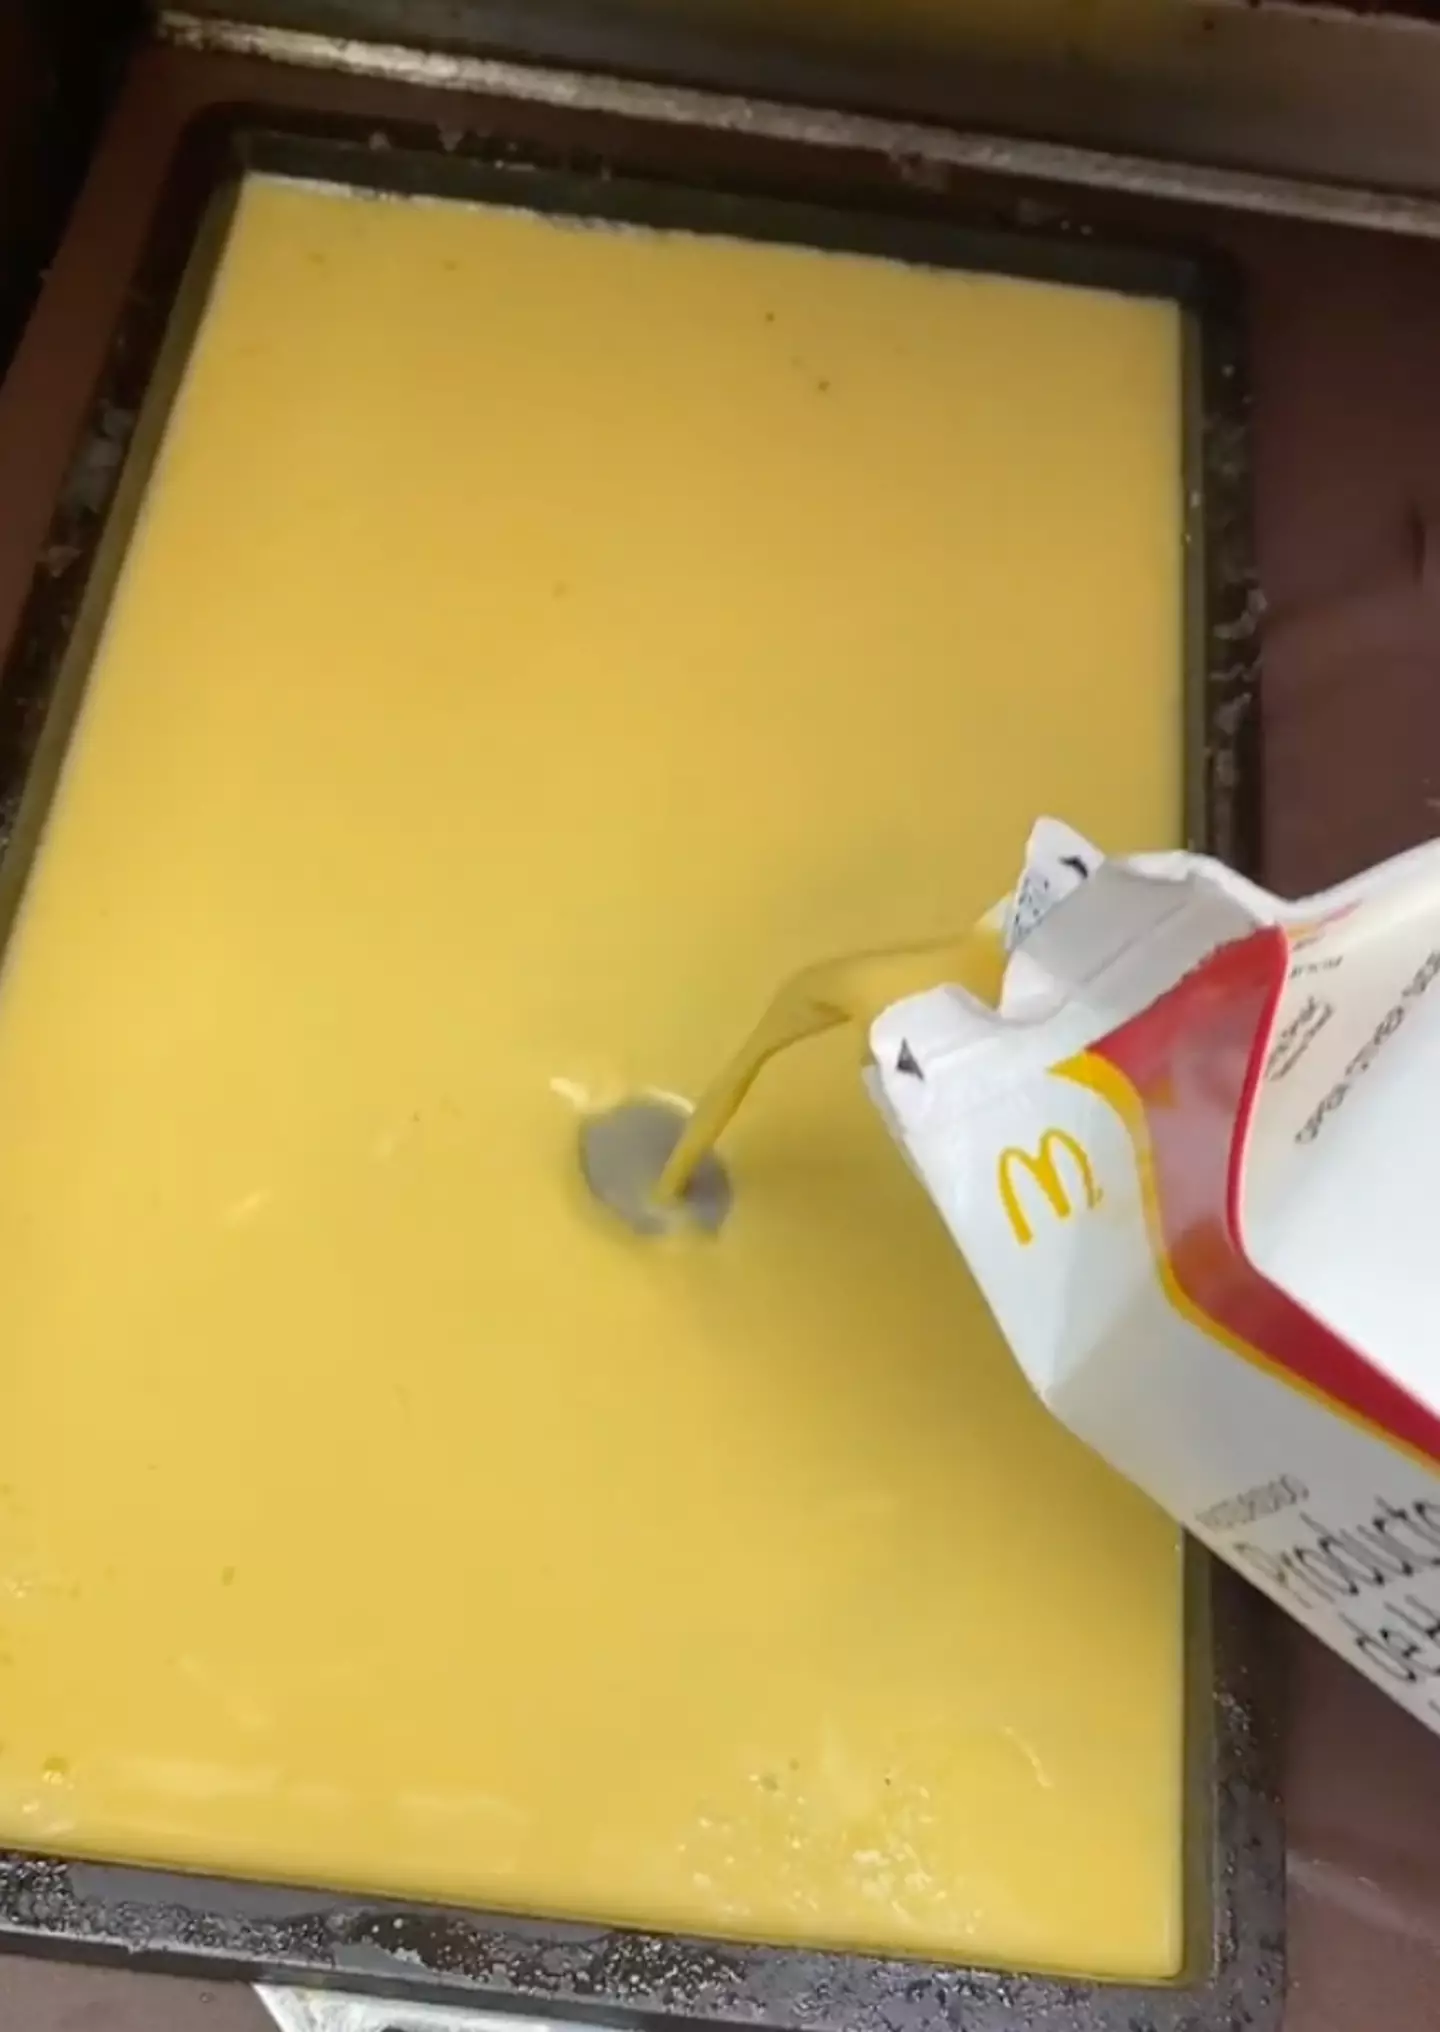 Ever wondered how McDonald's makes its scrambled eggs?